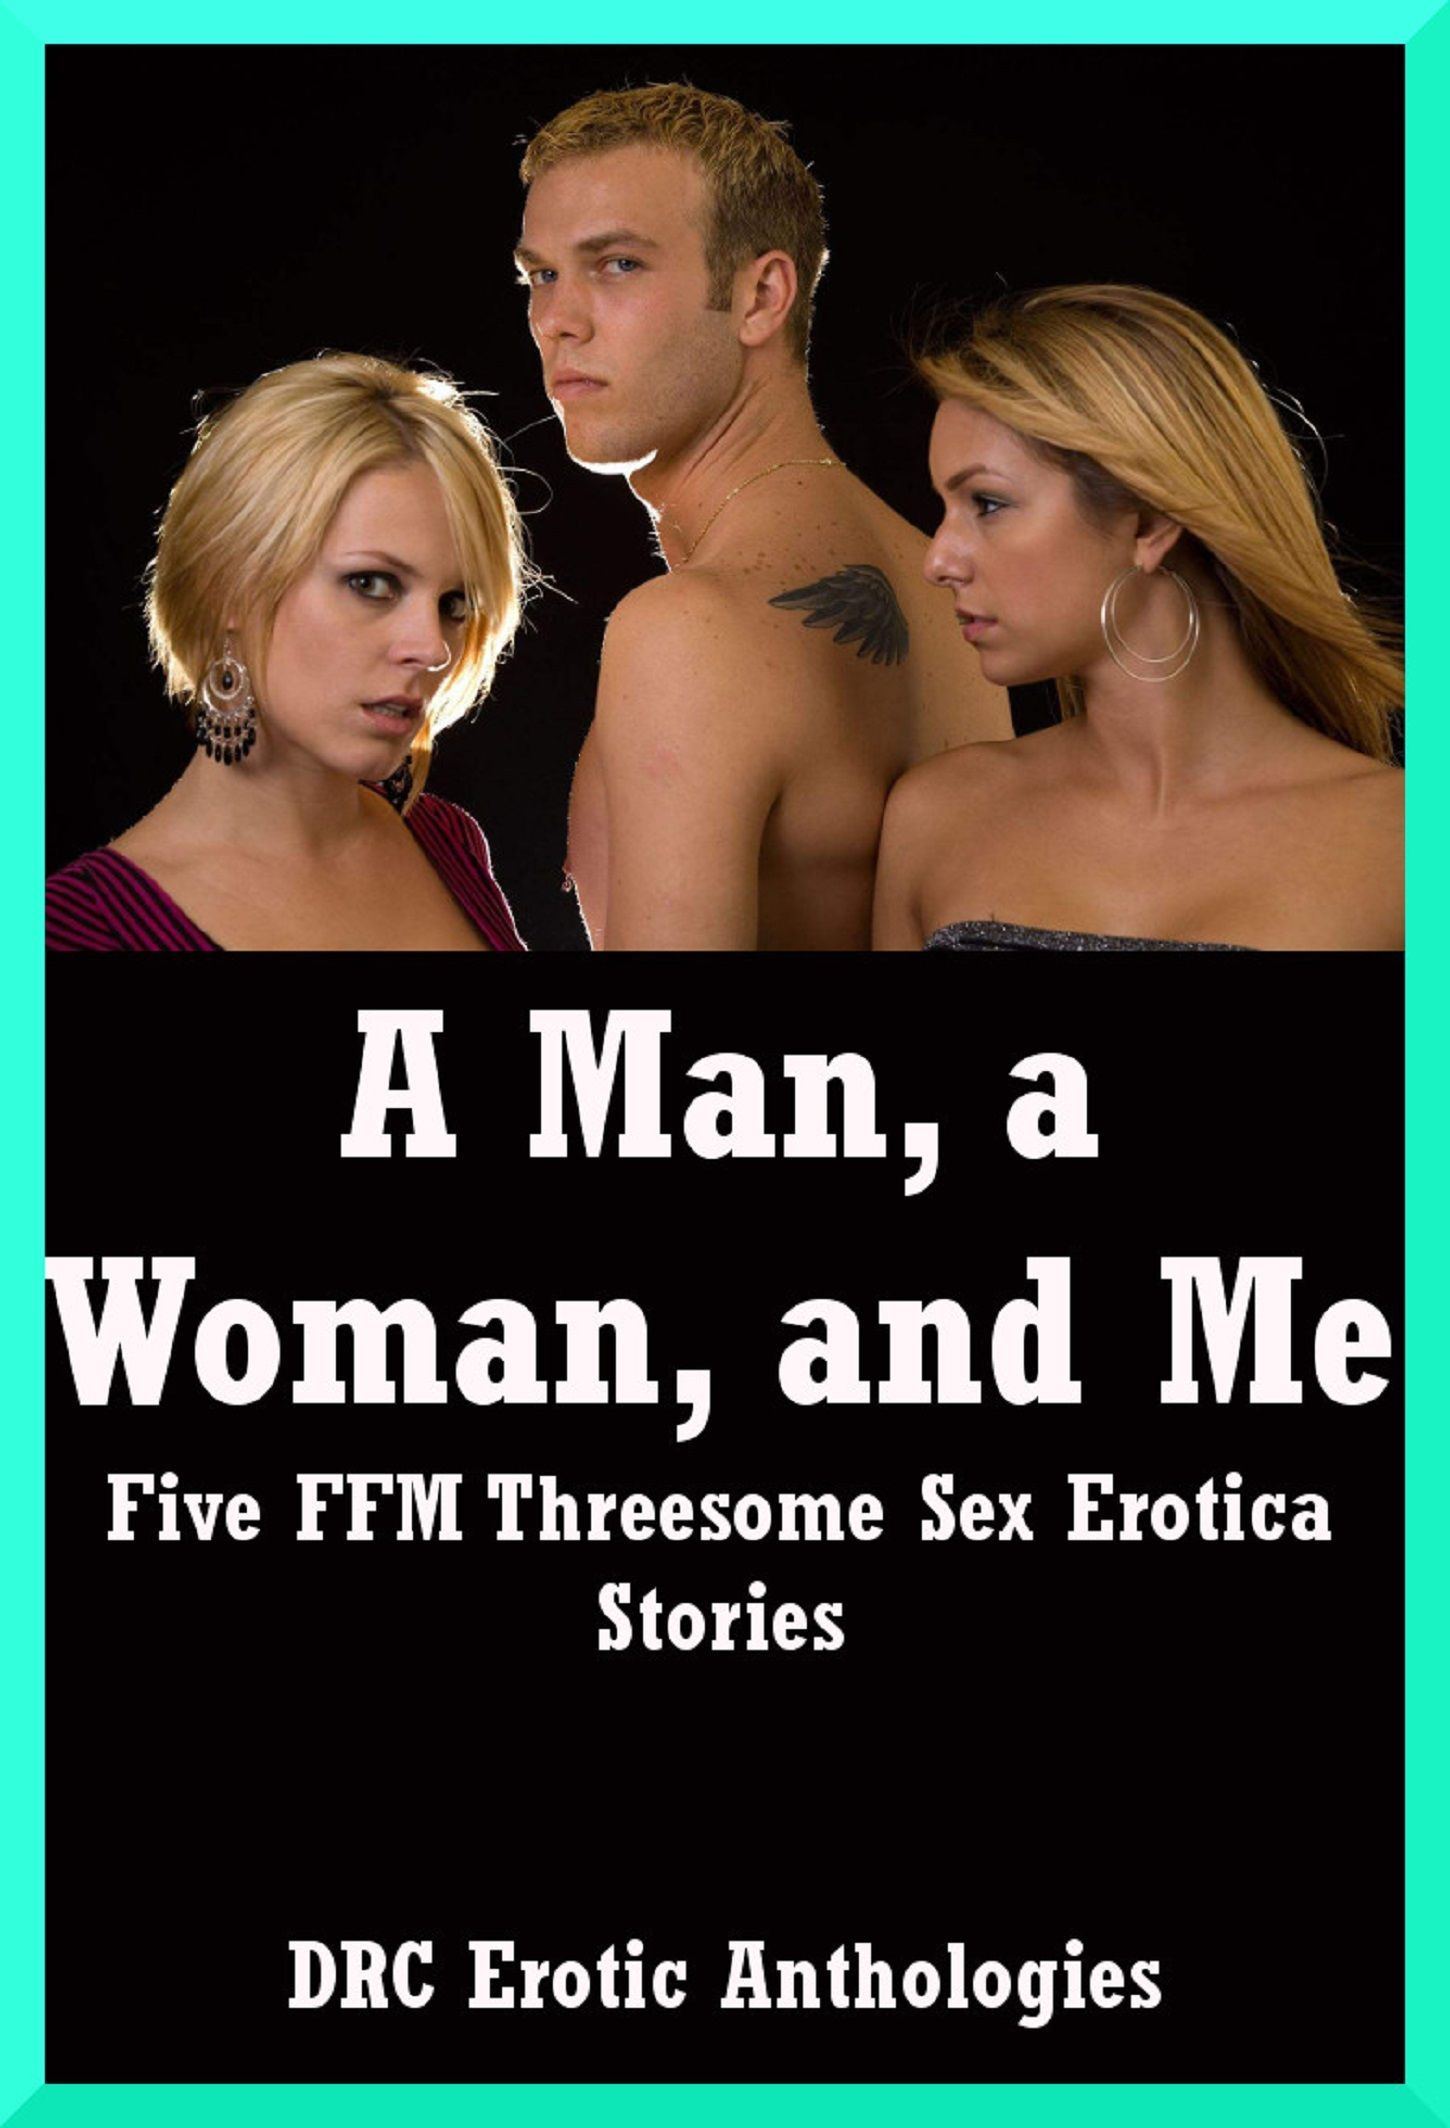 Fmf threesome sex stories